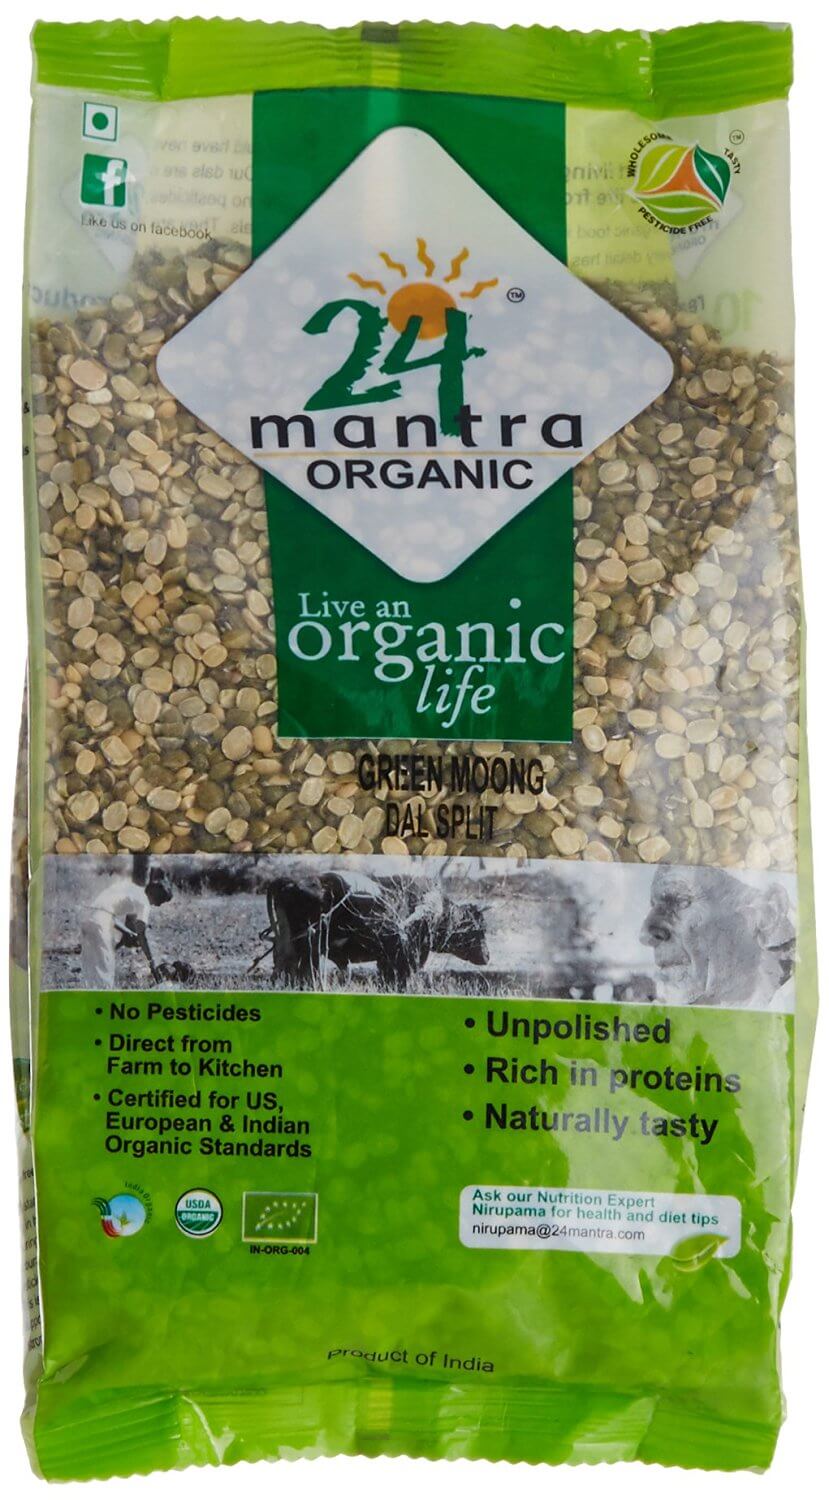 24 Mantra Organic Green Moong Dal Split 500g VizagShop.com